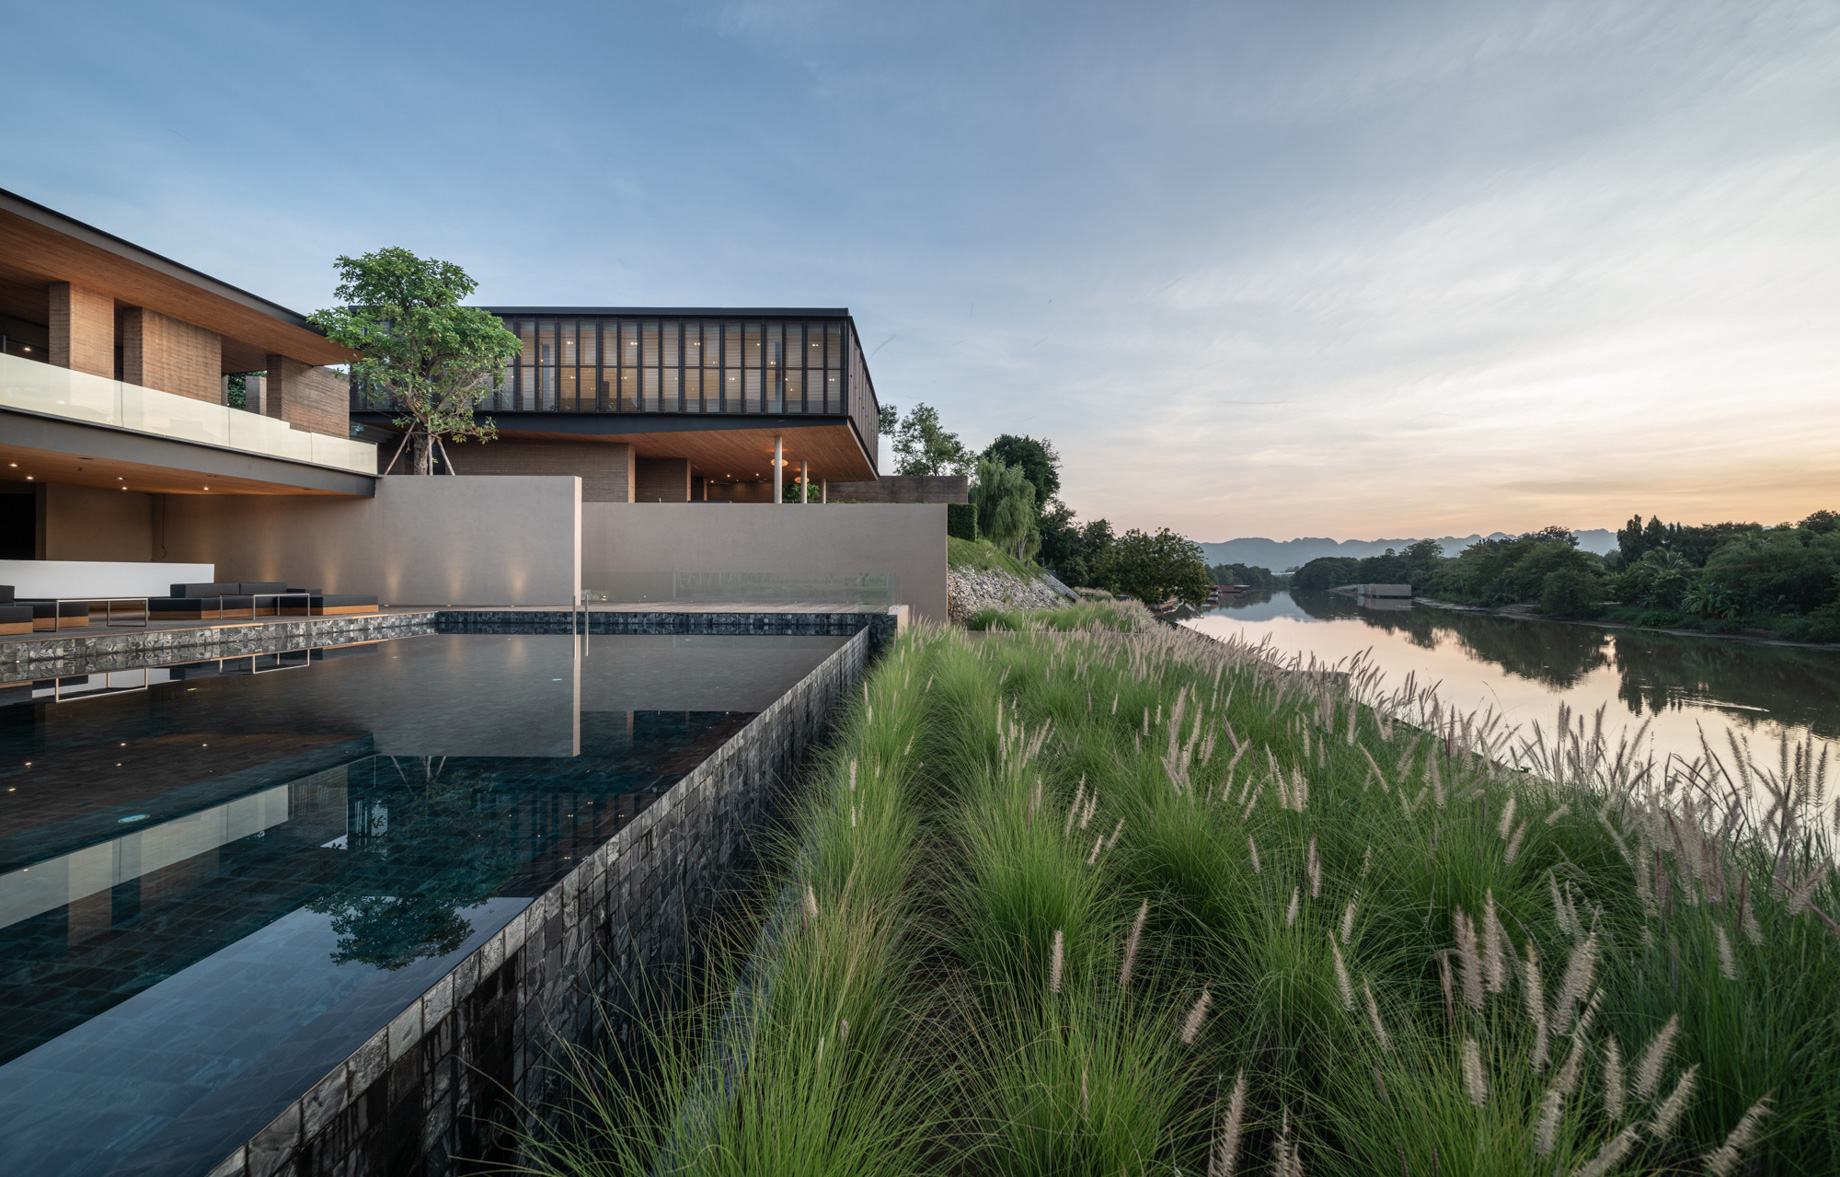 Tara Villa Riverkwai Resort - Kanchanaburi, Thailand - Infinity Pool River View